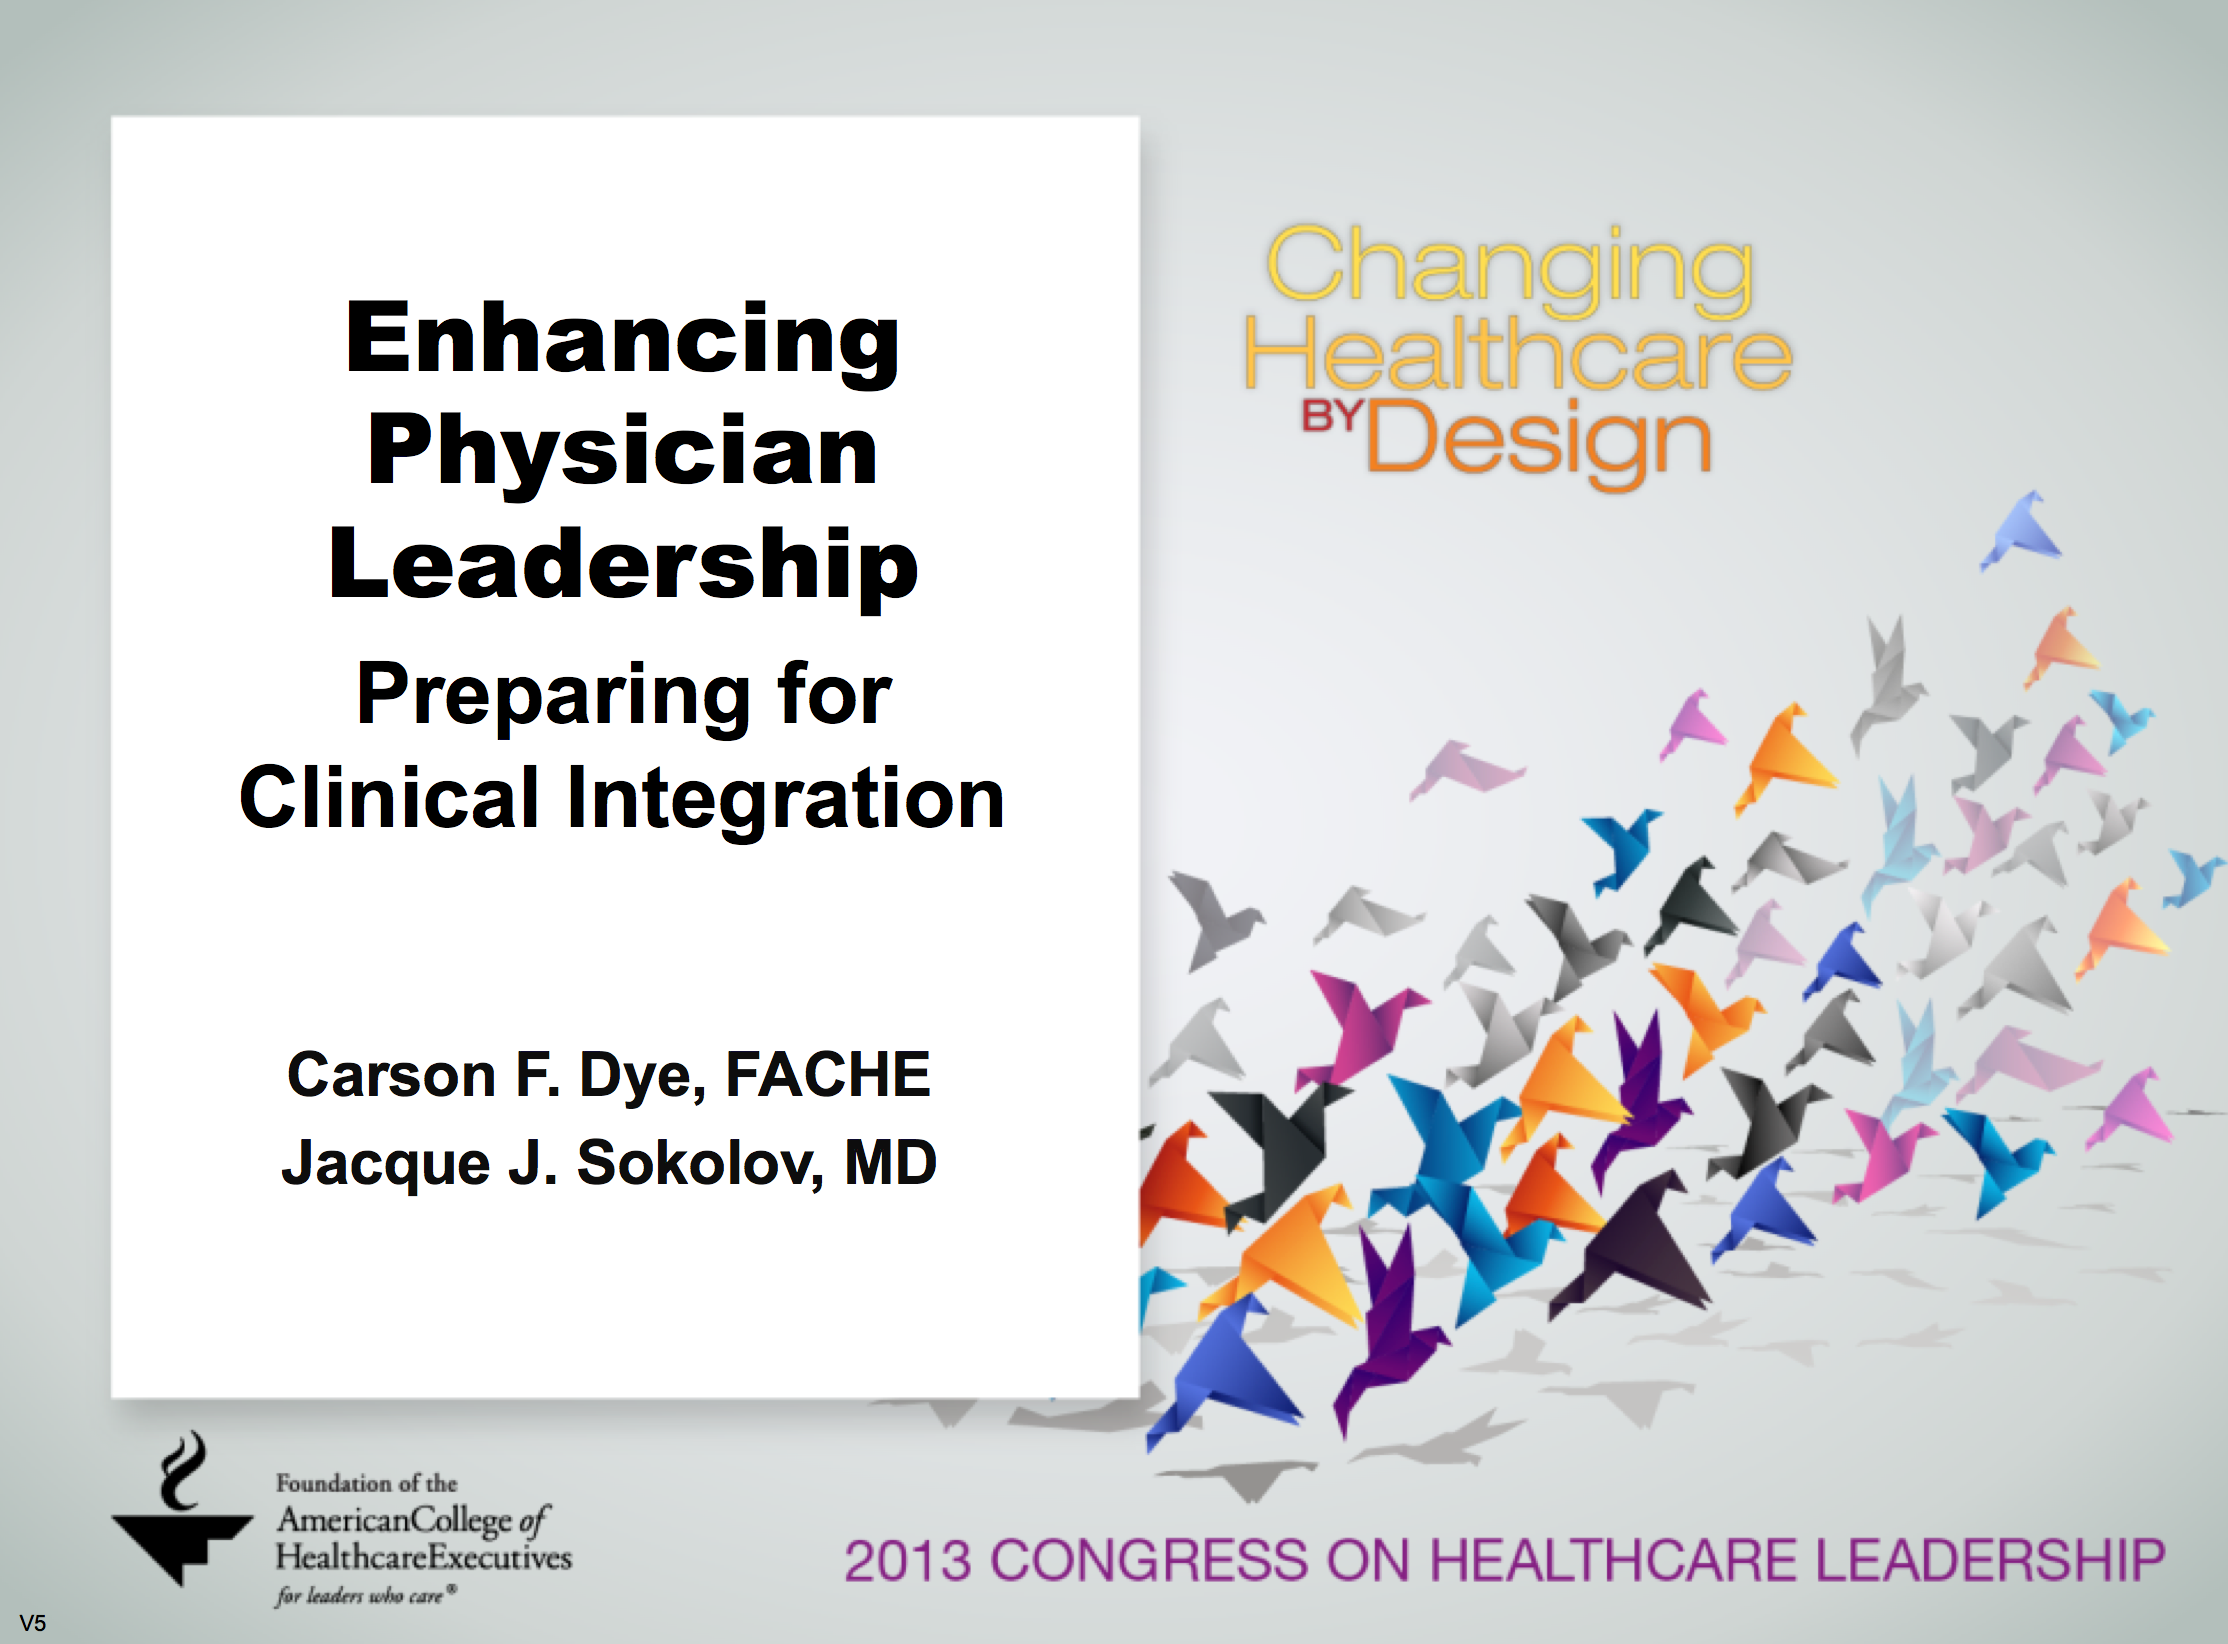 ACHE Congress 2013 - Enhancing Physician Leadership Preparing for Clinical Integration